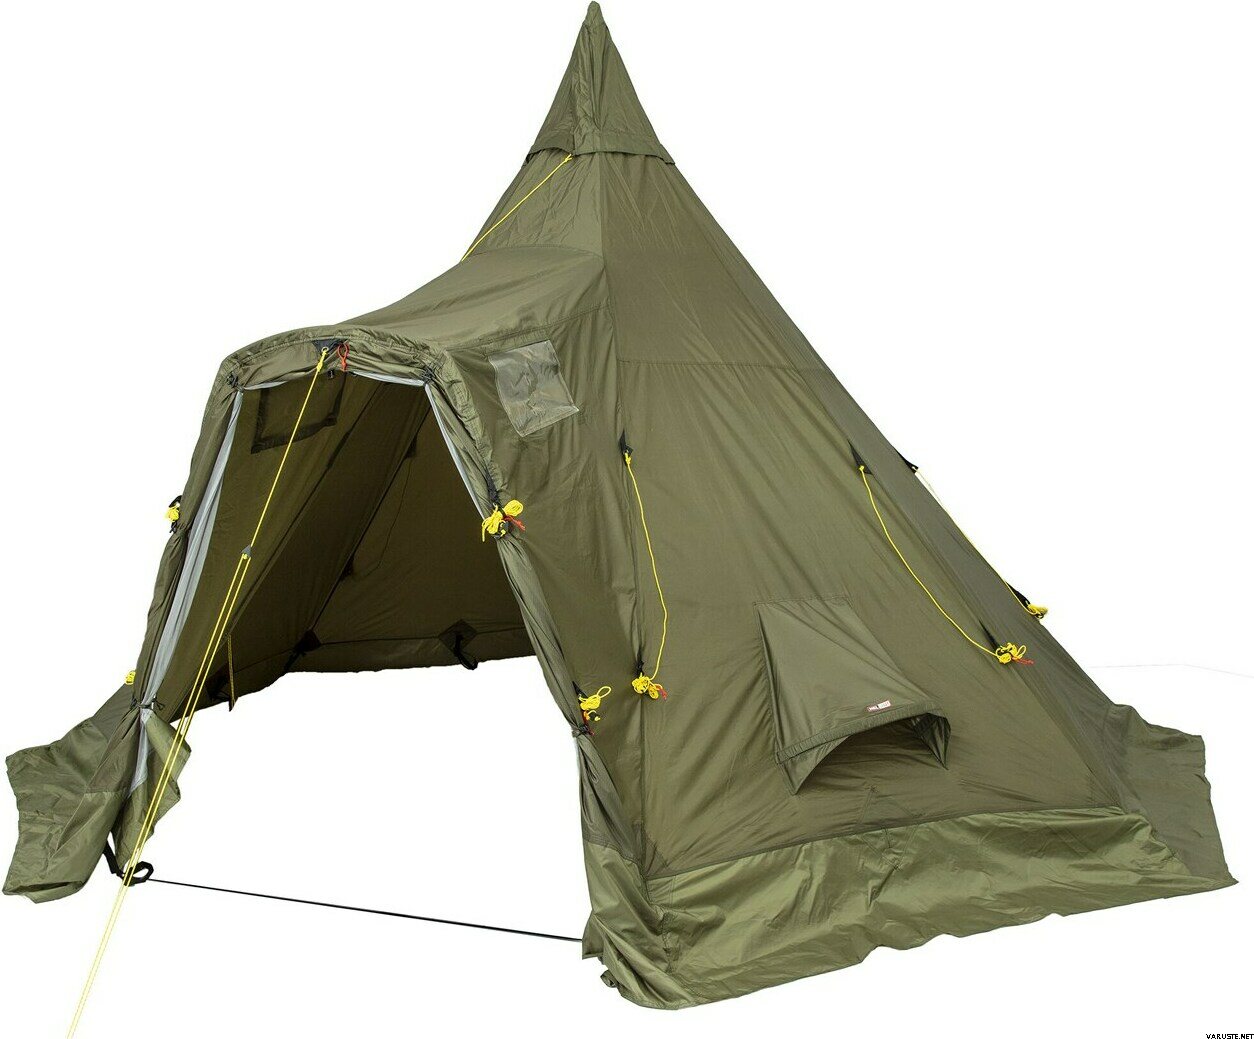 Camping 12. Палатка Helsport Varanger 12-14 Green. Lavvo 4-6 person палатка. Палатка Varanger Dome. Палатка Хелспорт 12 местная.